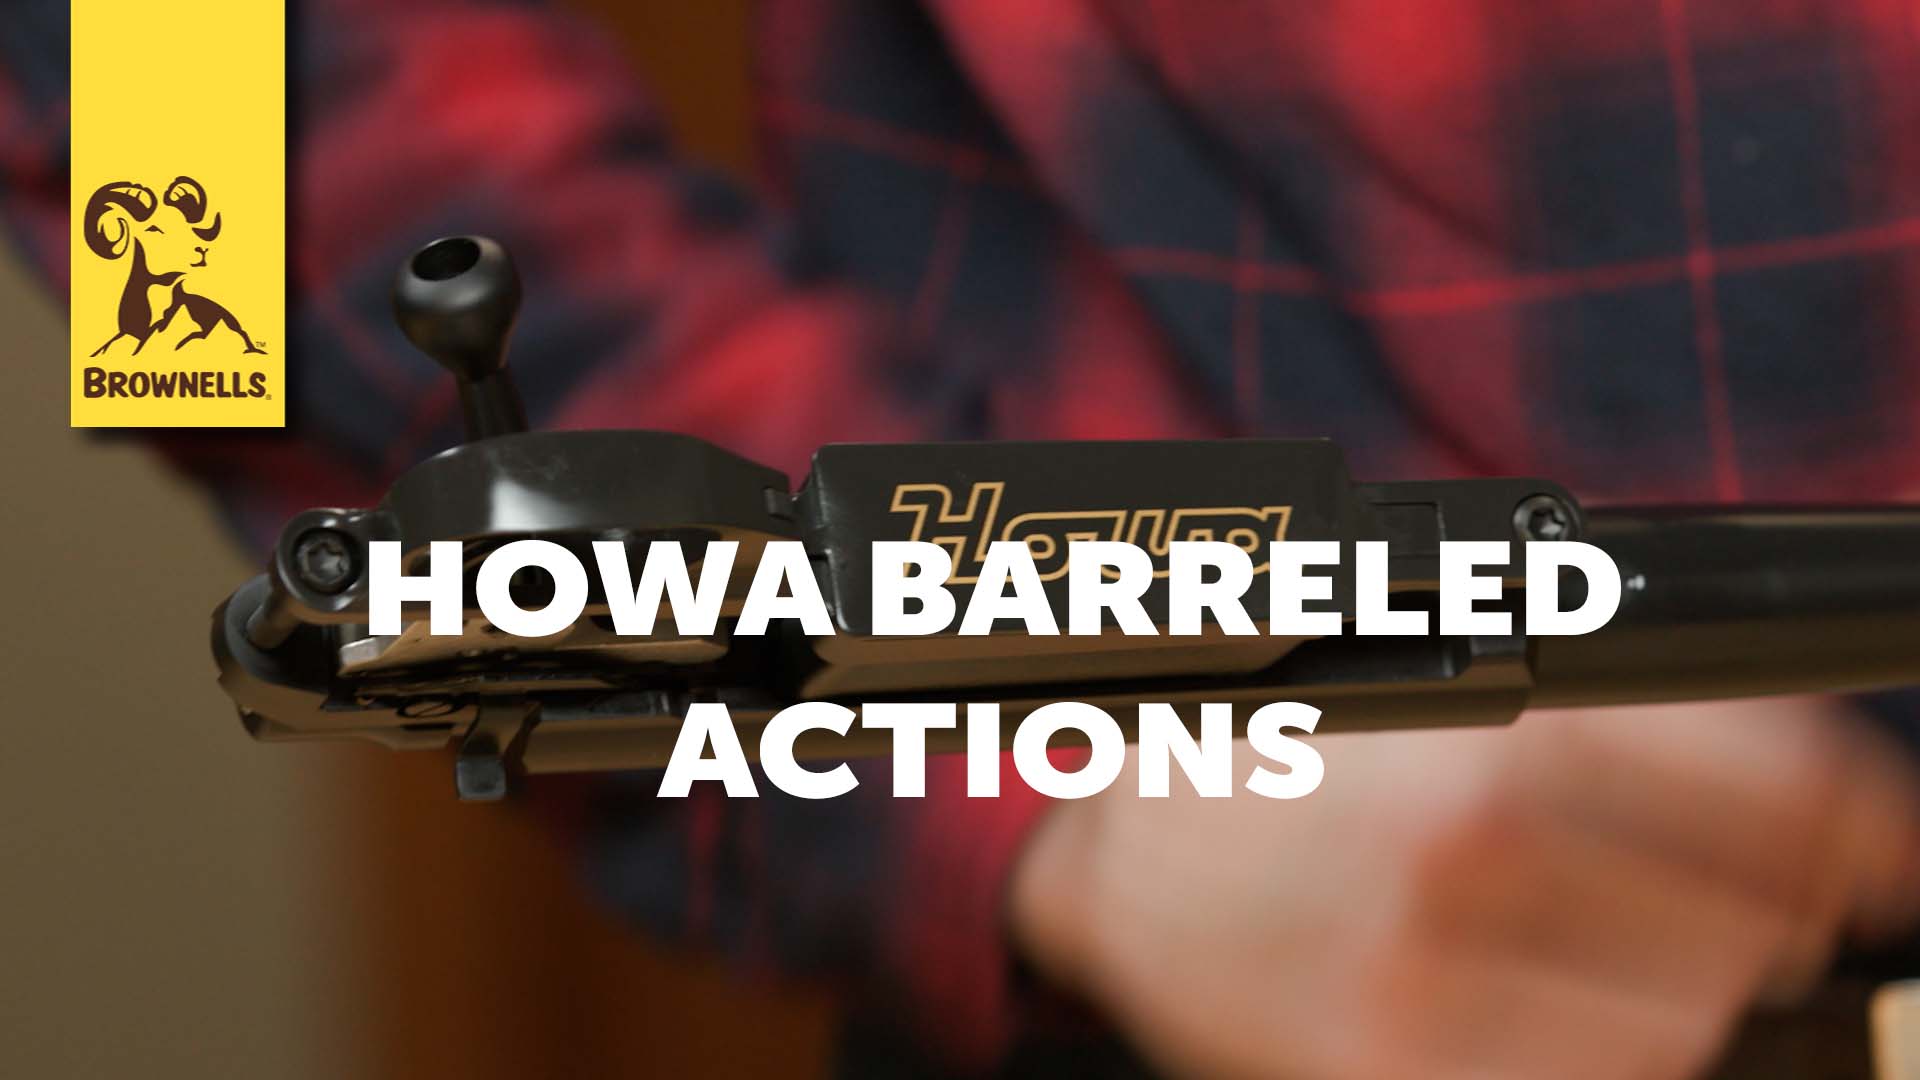 Product Spotlight: Howa Barreled Actions